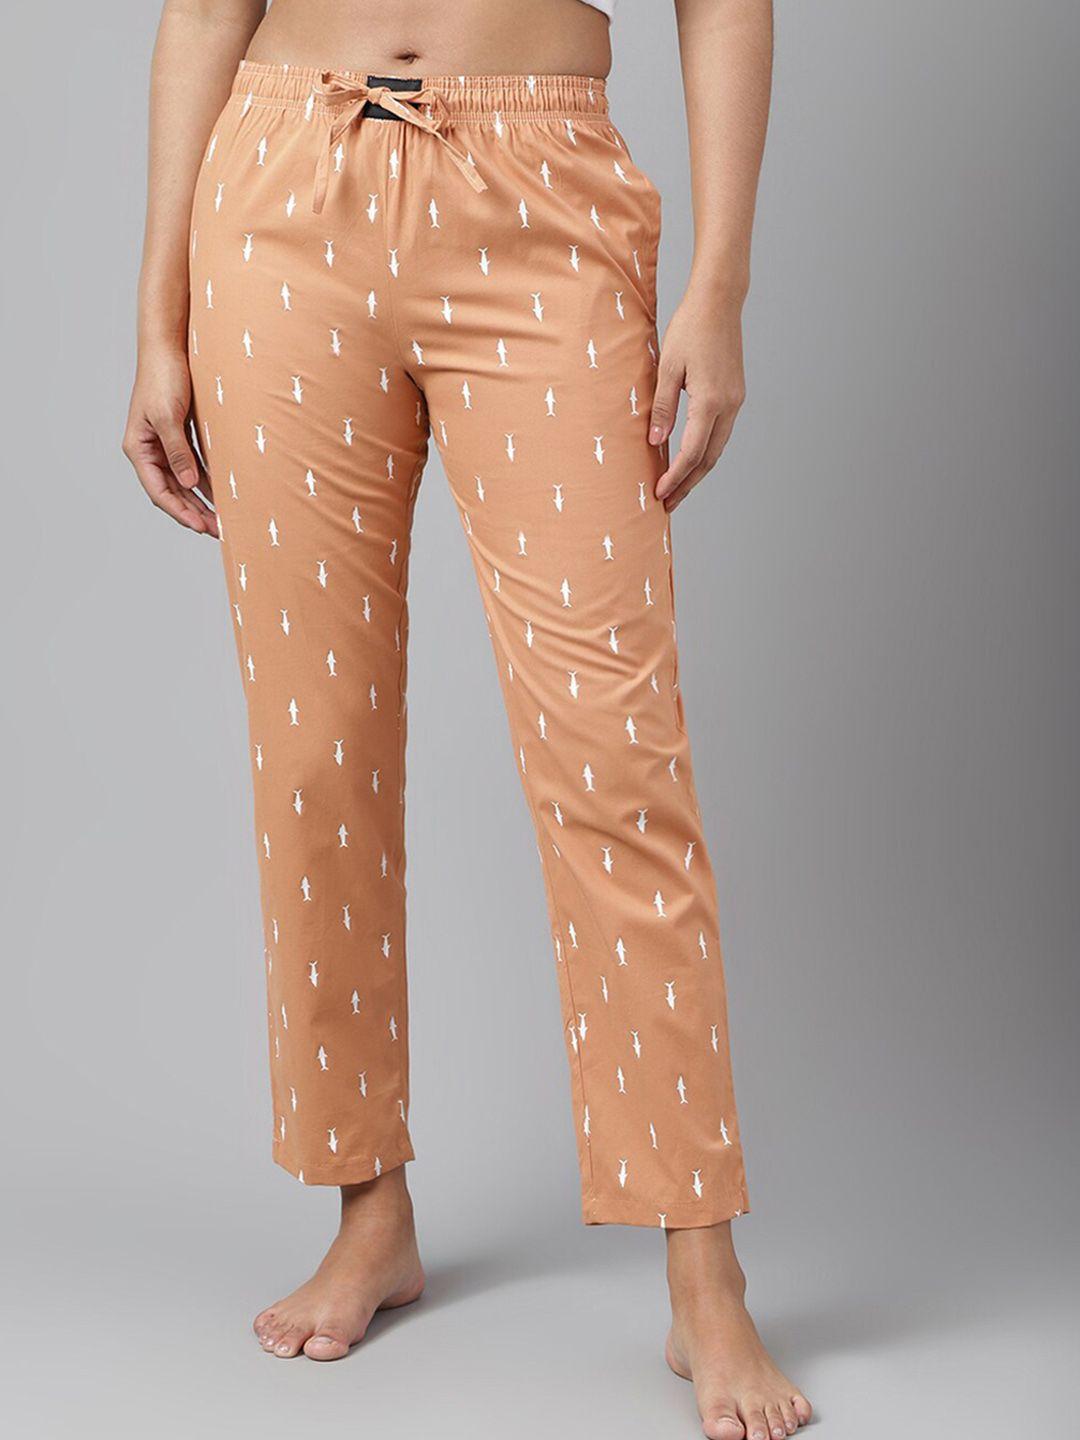 flamboyant pure cotton conversational printed lounge pants